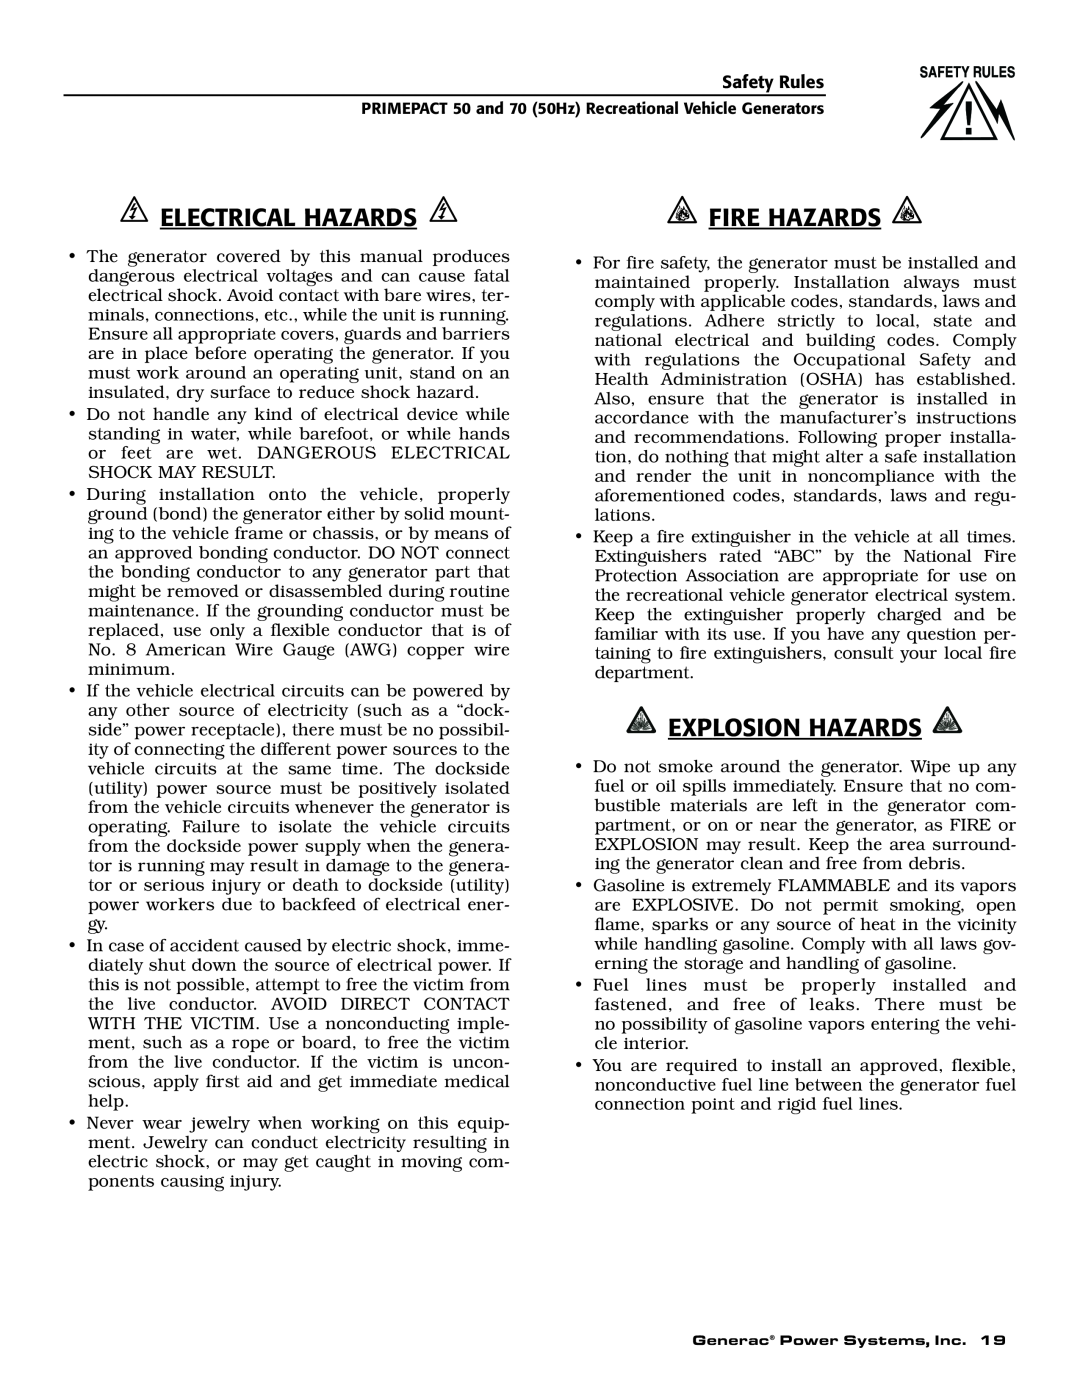 Generac 00784-2, 09290-4 owner manual Electrical Hazards, Explosion Hazards, Fire Hazards 